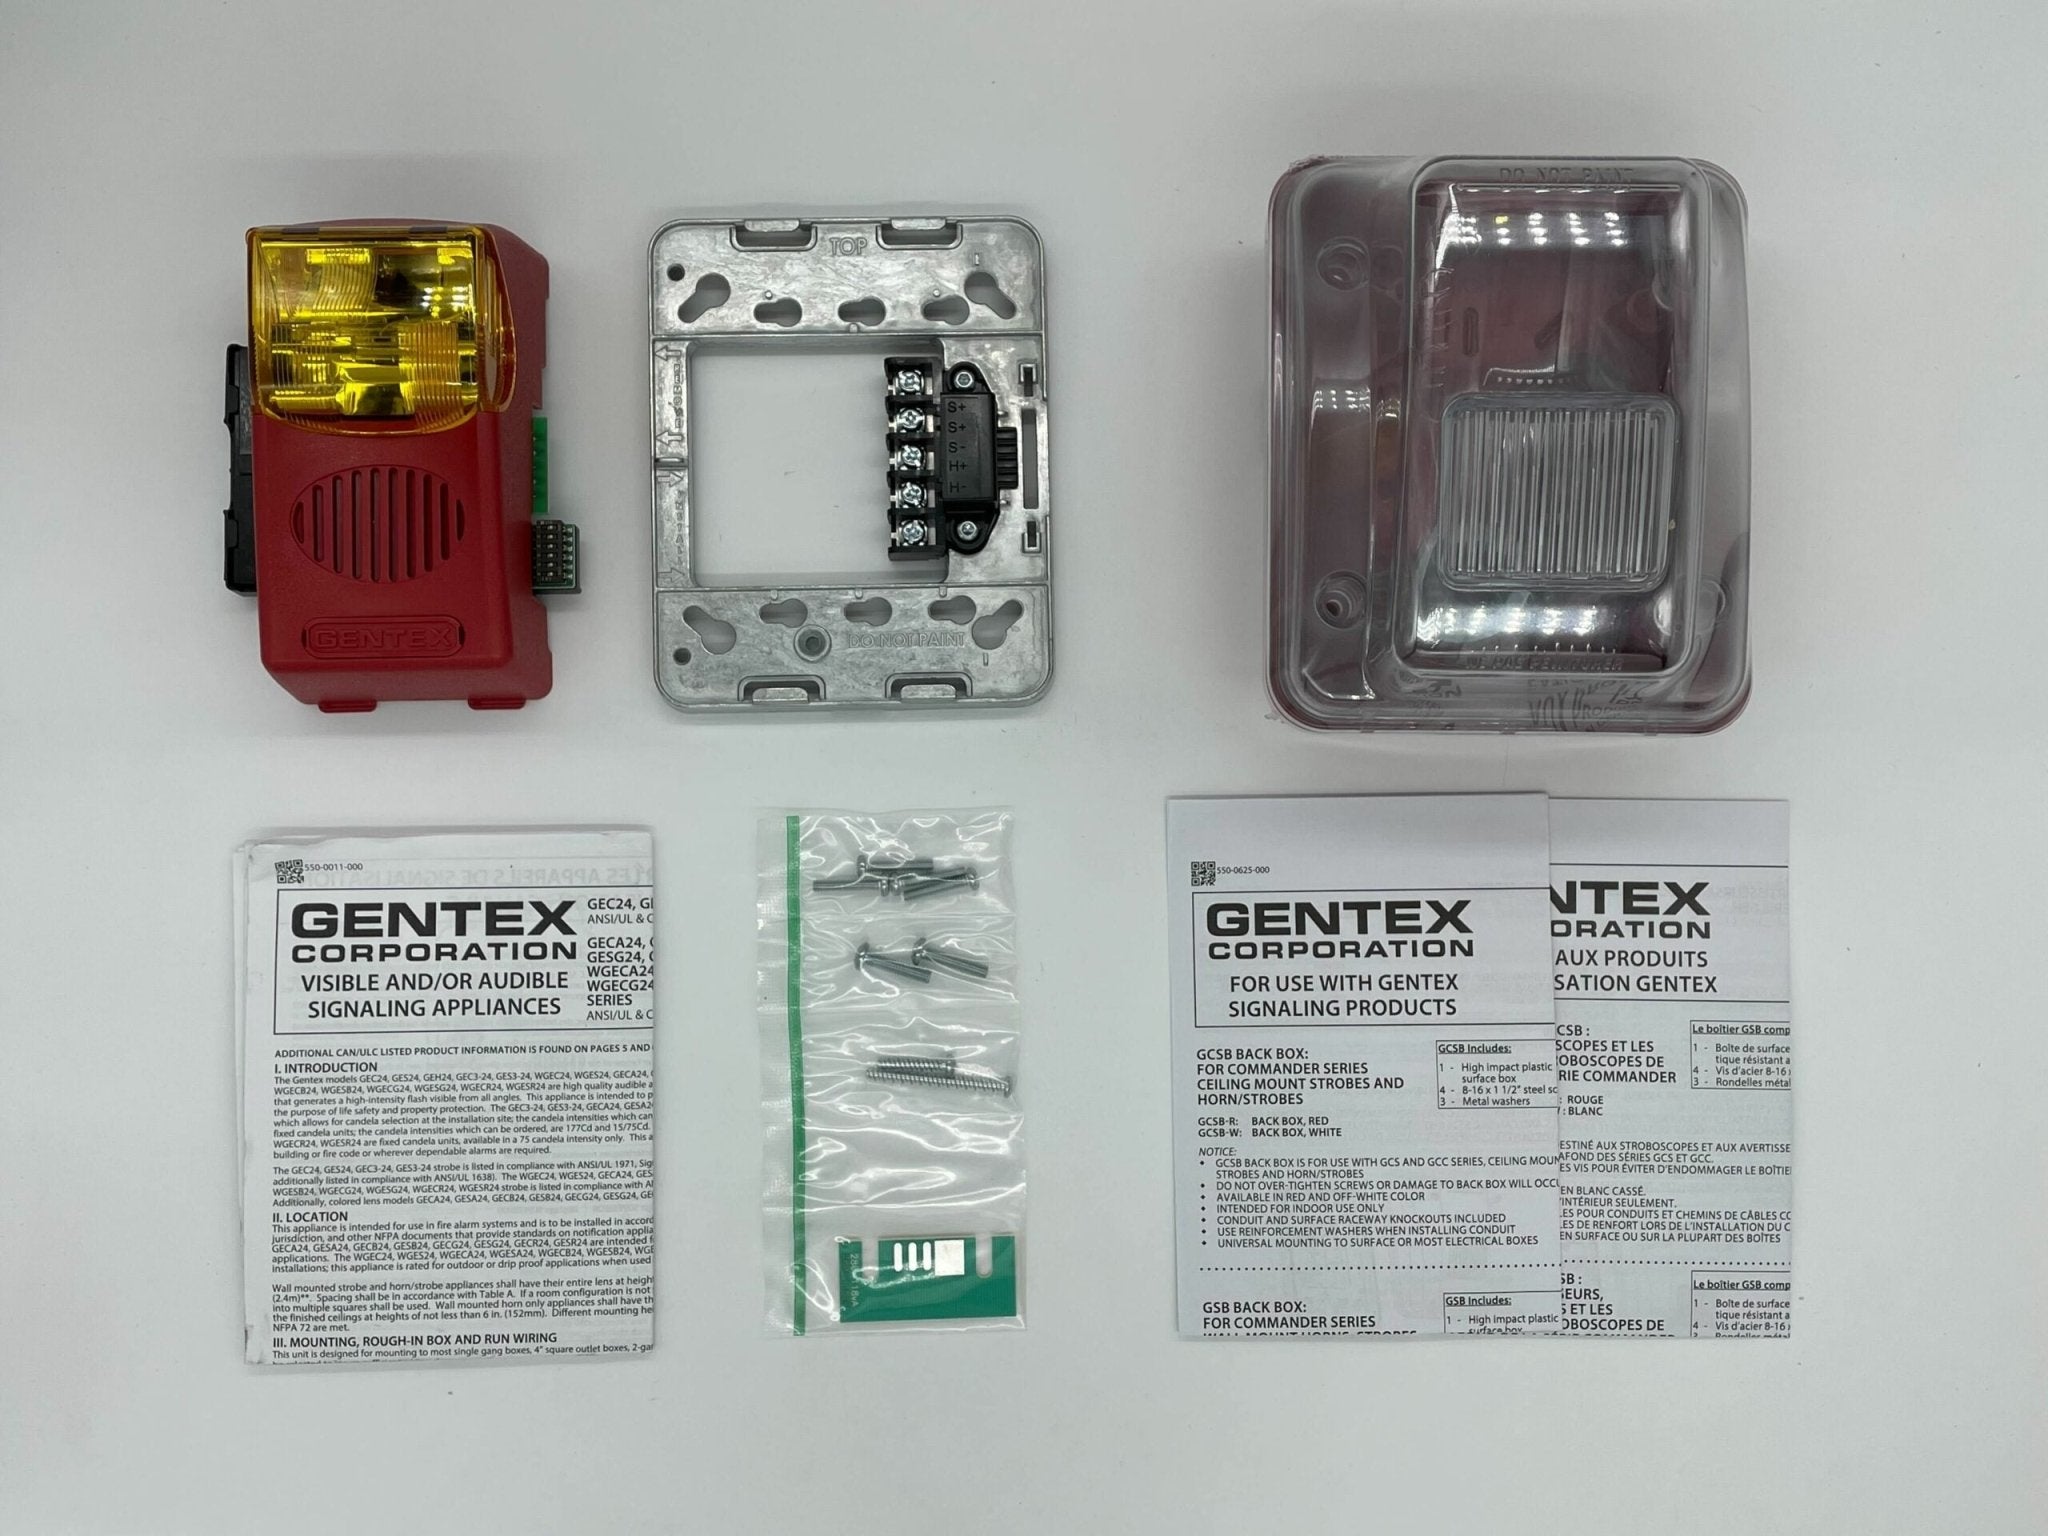 Gentex WGECA24-75PWR Outdoor Horn/Strobe - The Fire Alarm Supplier